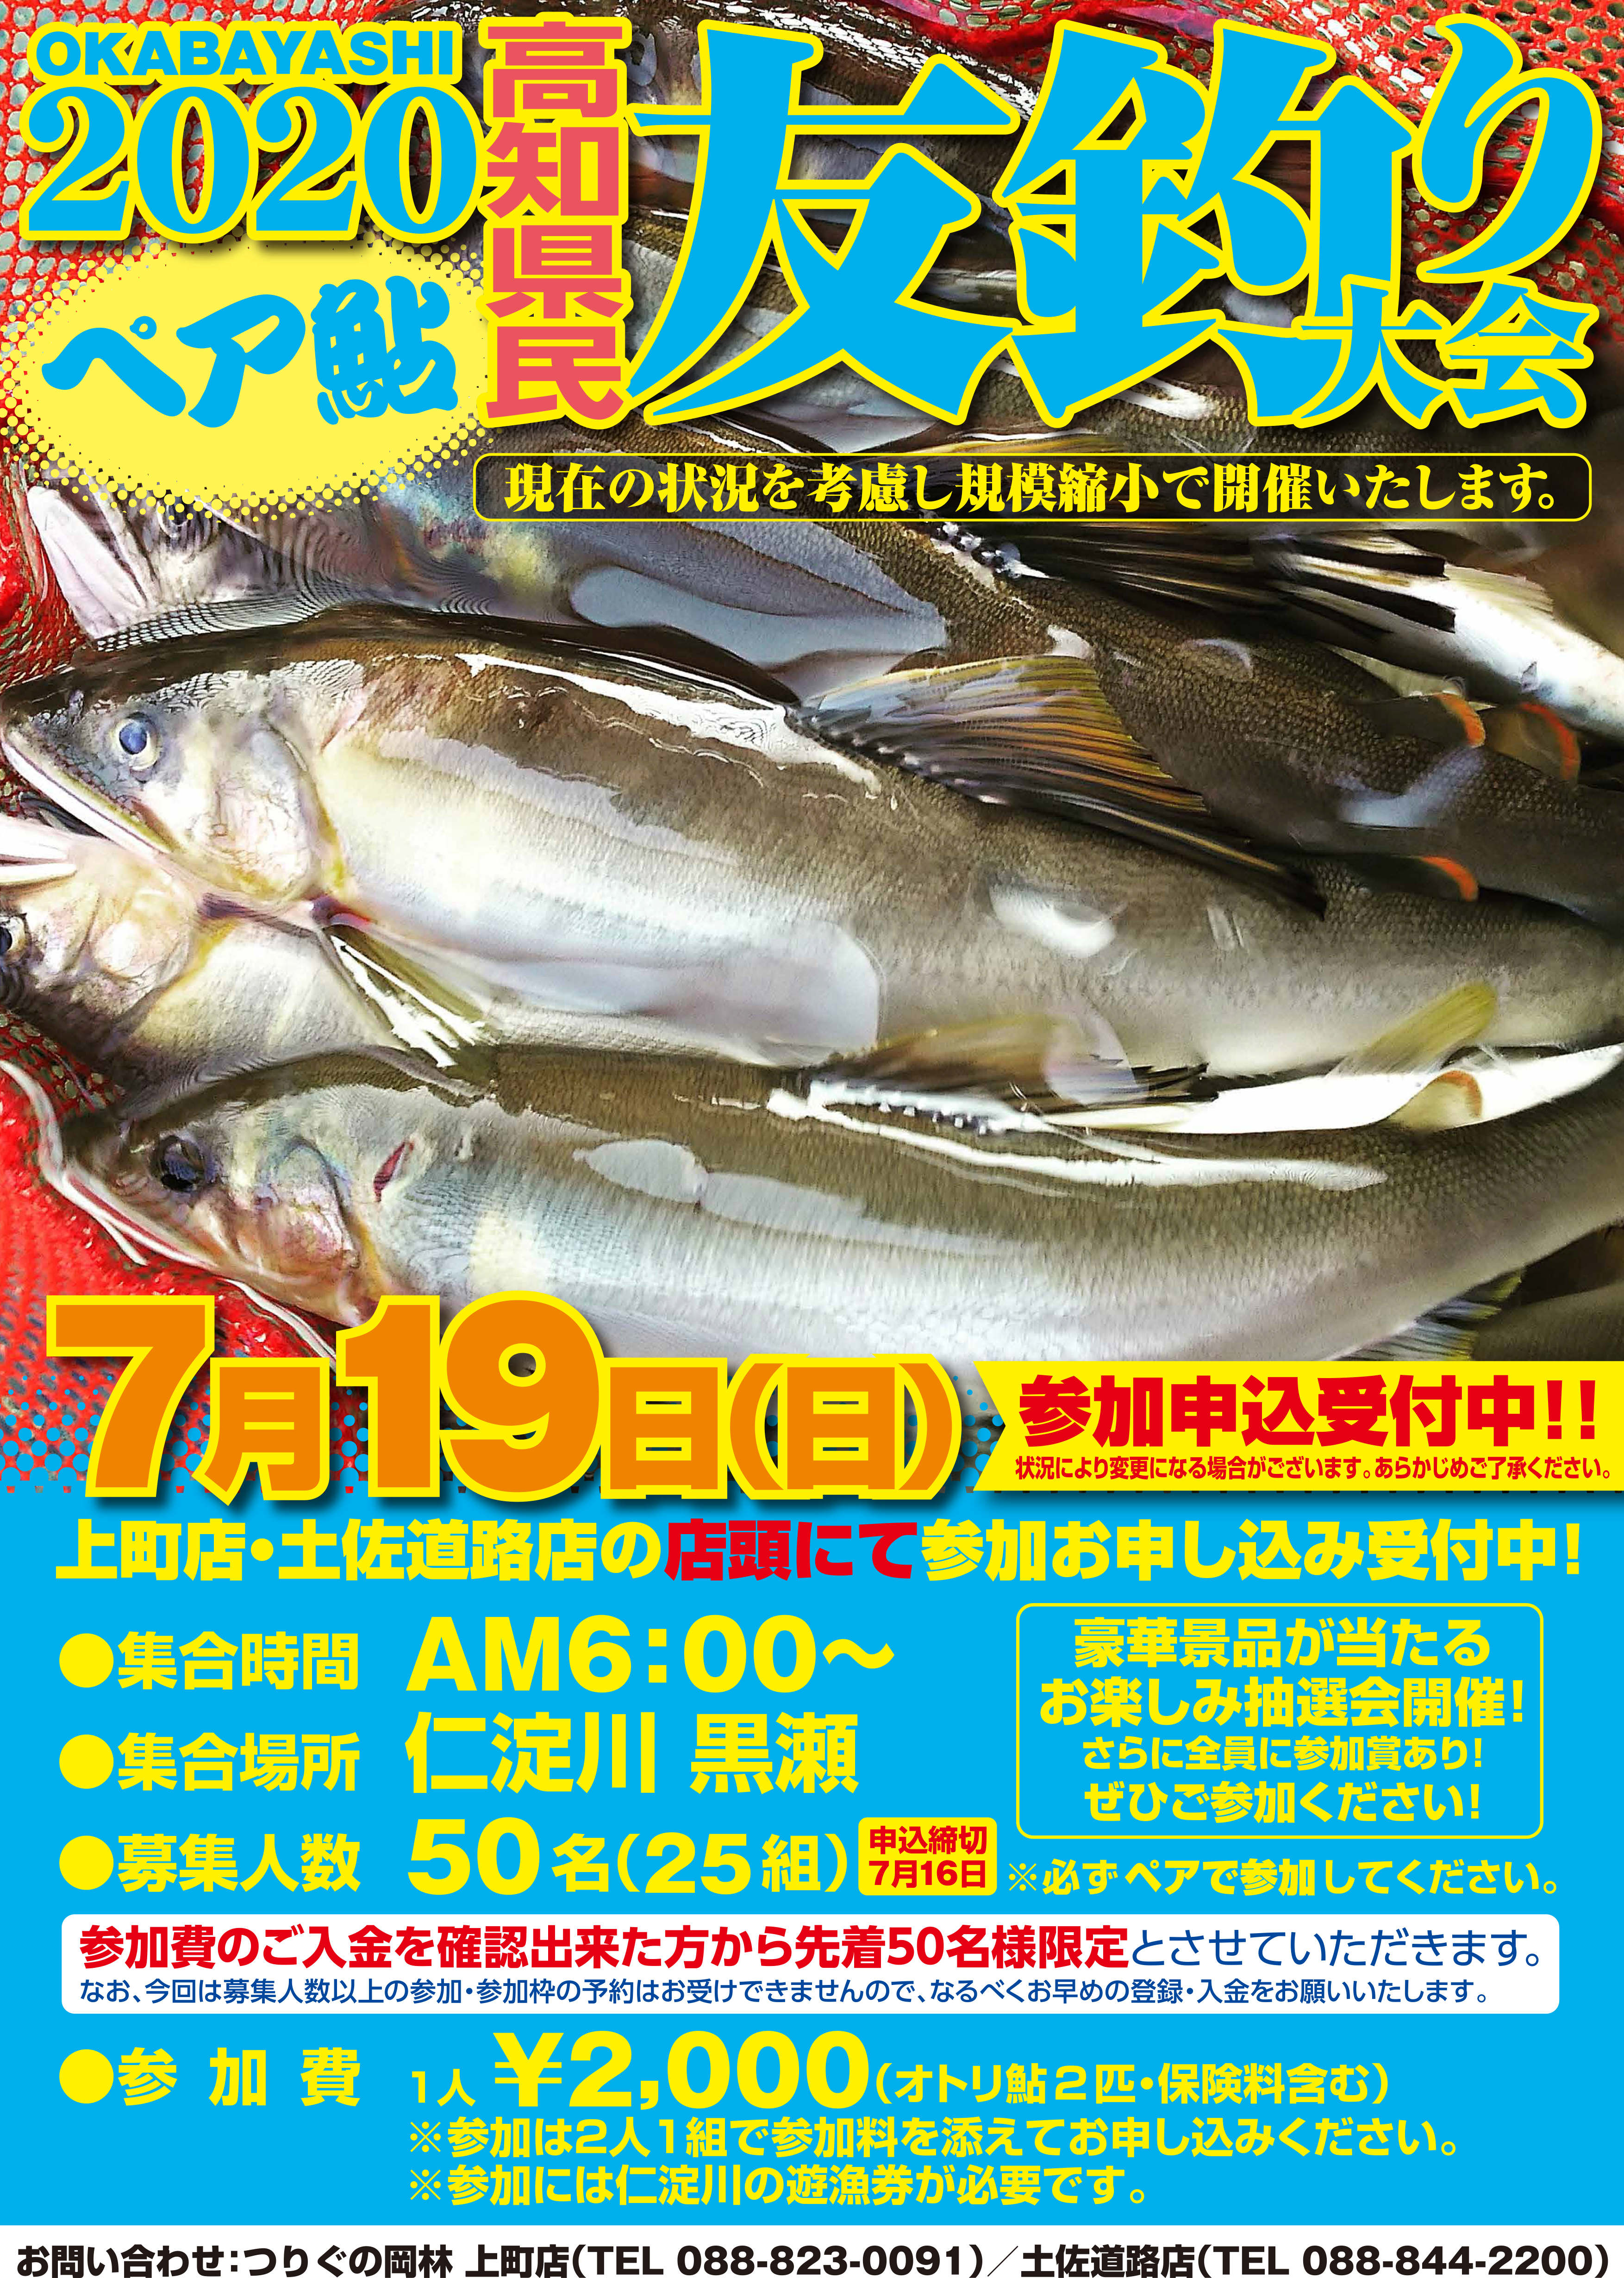 2020年高知県民 ペア鮎共釣り大会